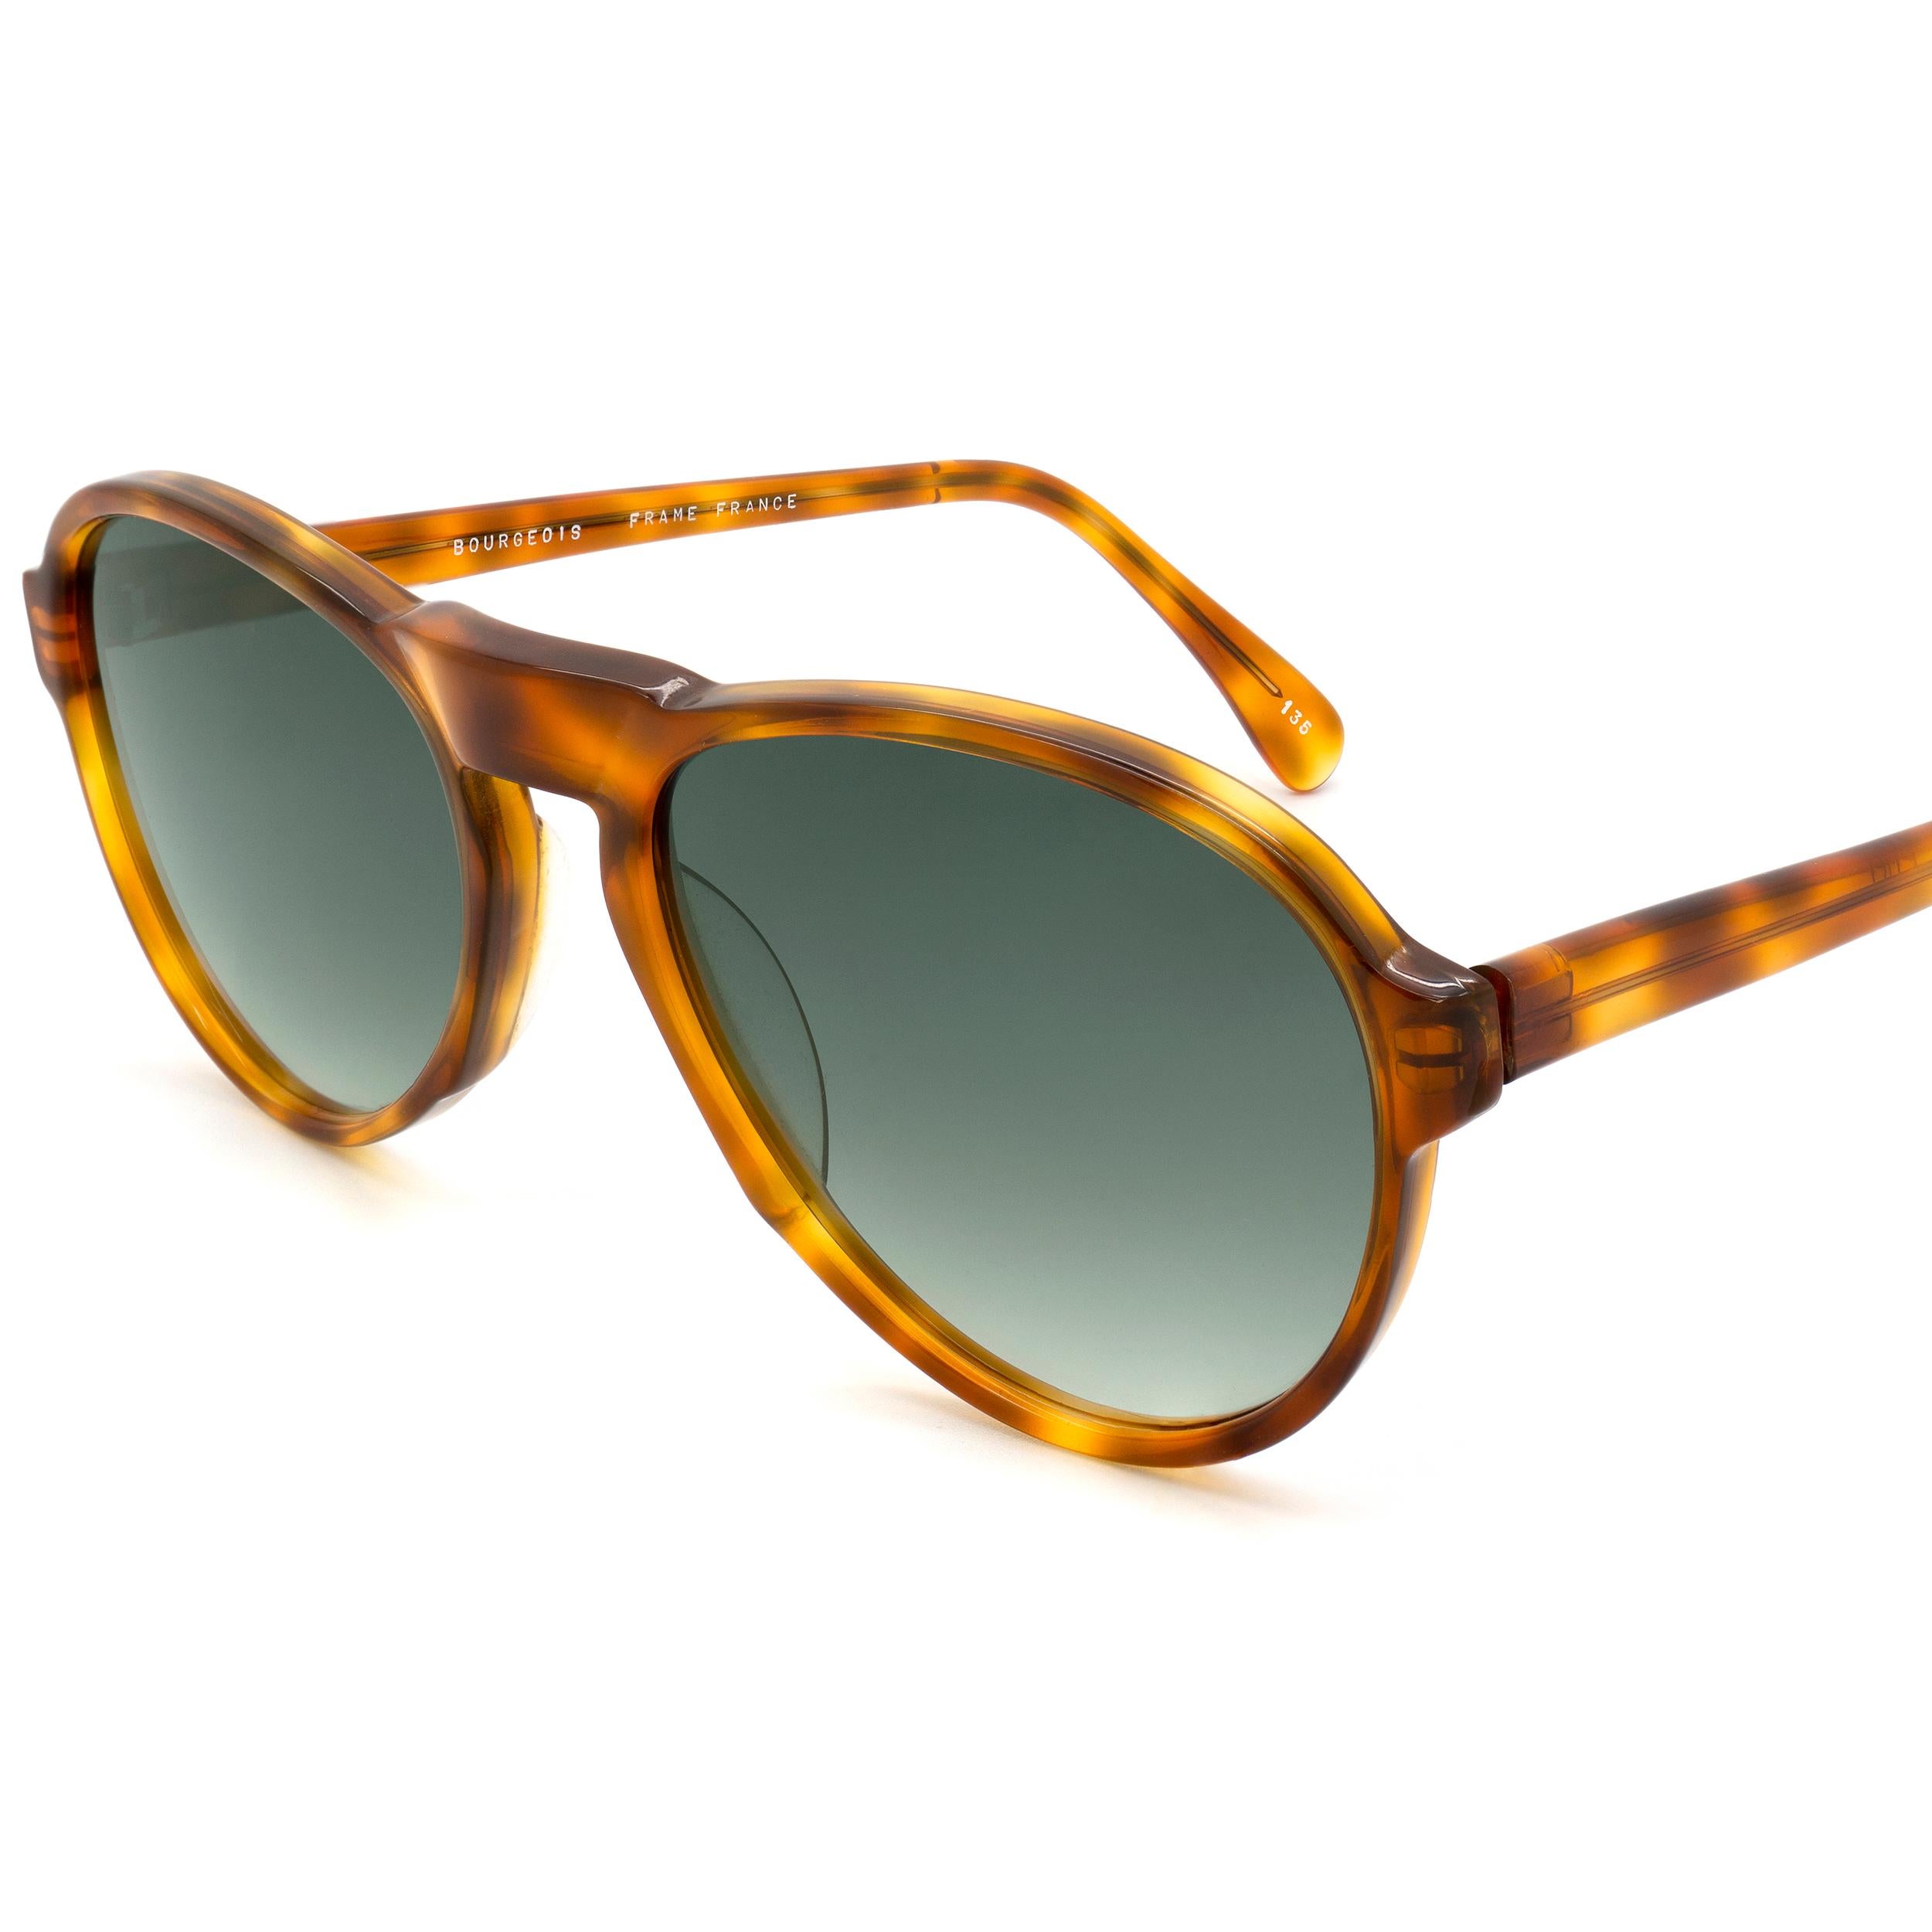 Brown Bourgeois aviator vintage sunglasses, FRANCE